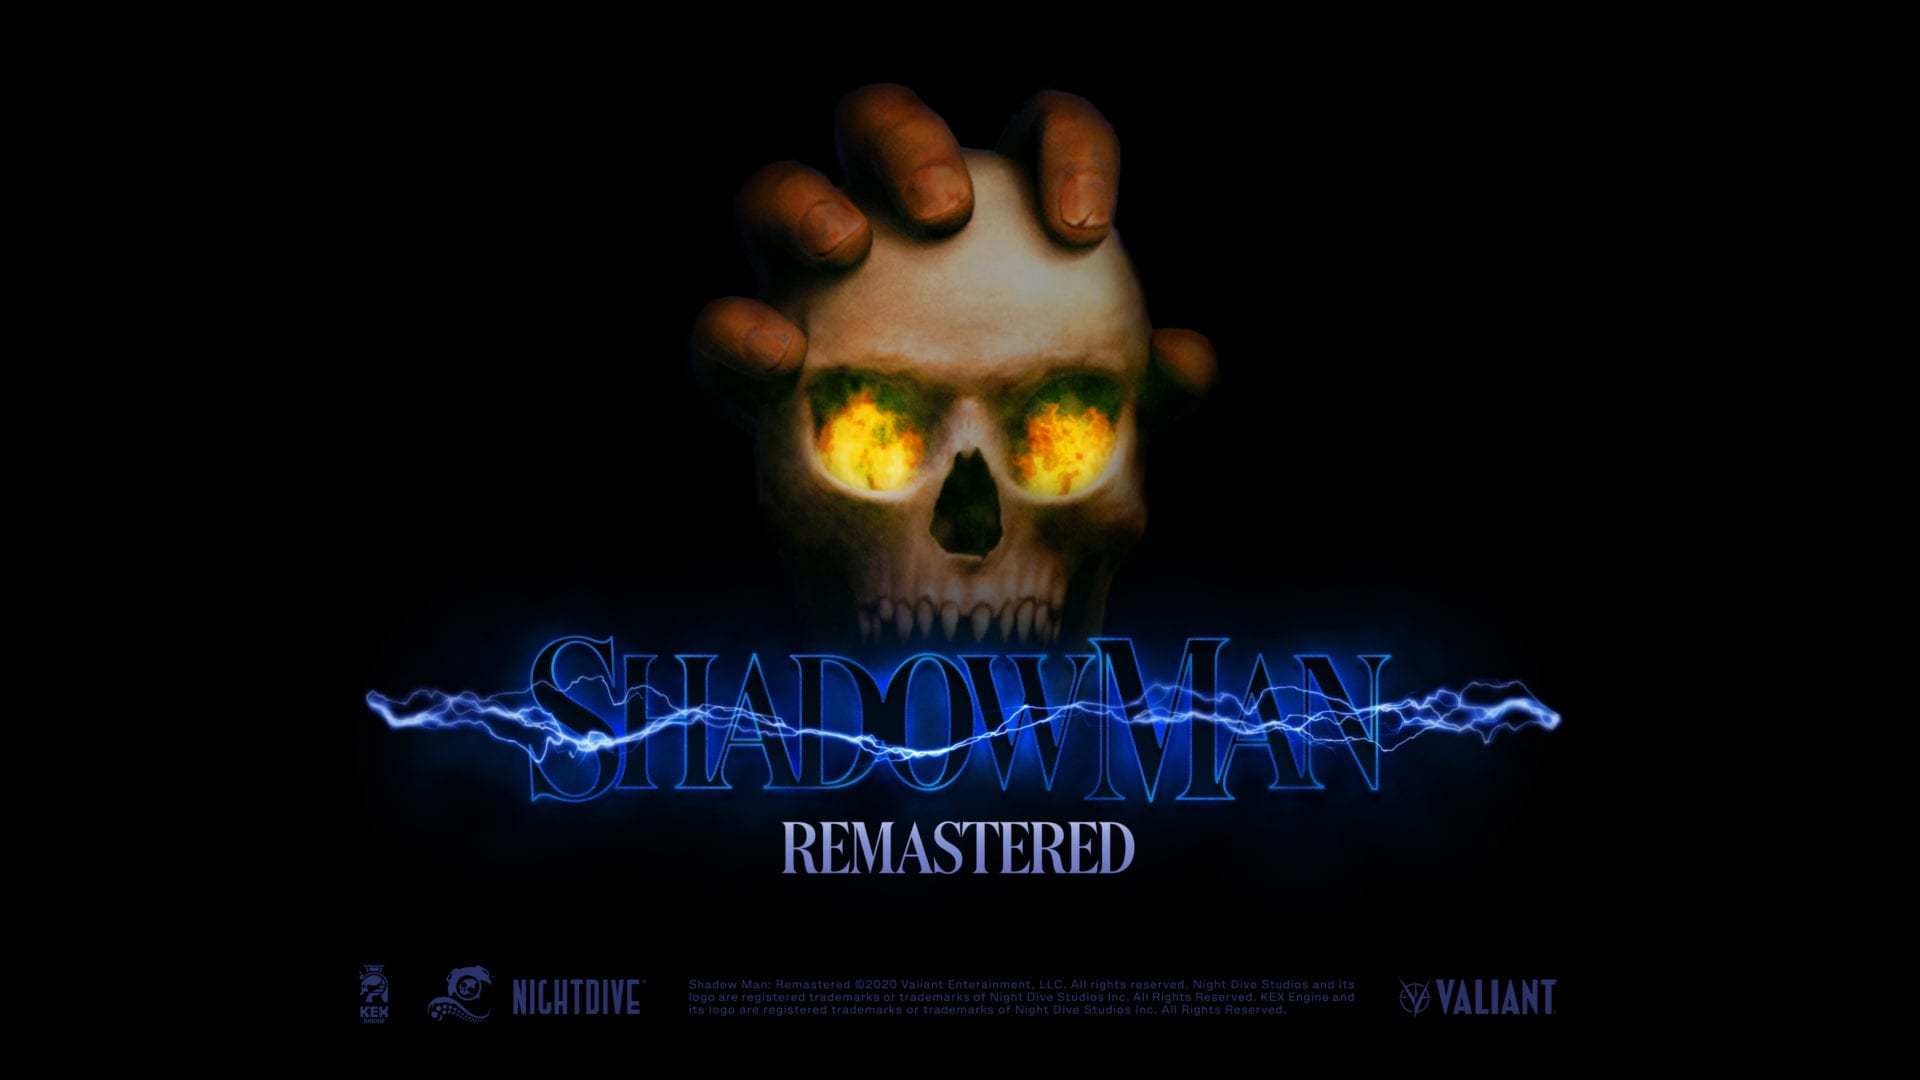 shadow-man-remastered-announcement-01.jpg